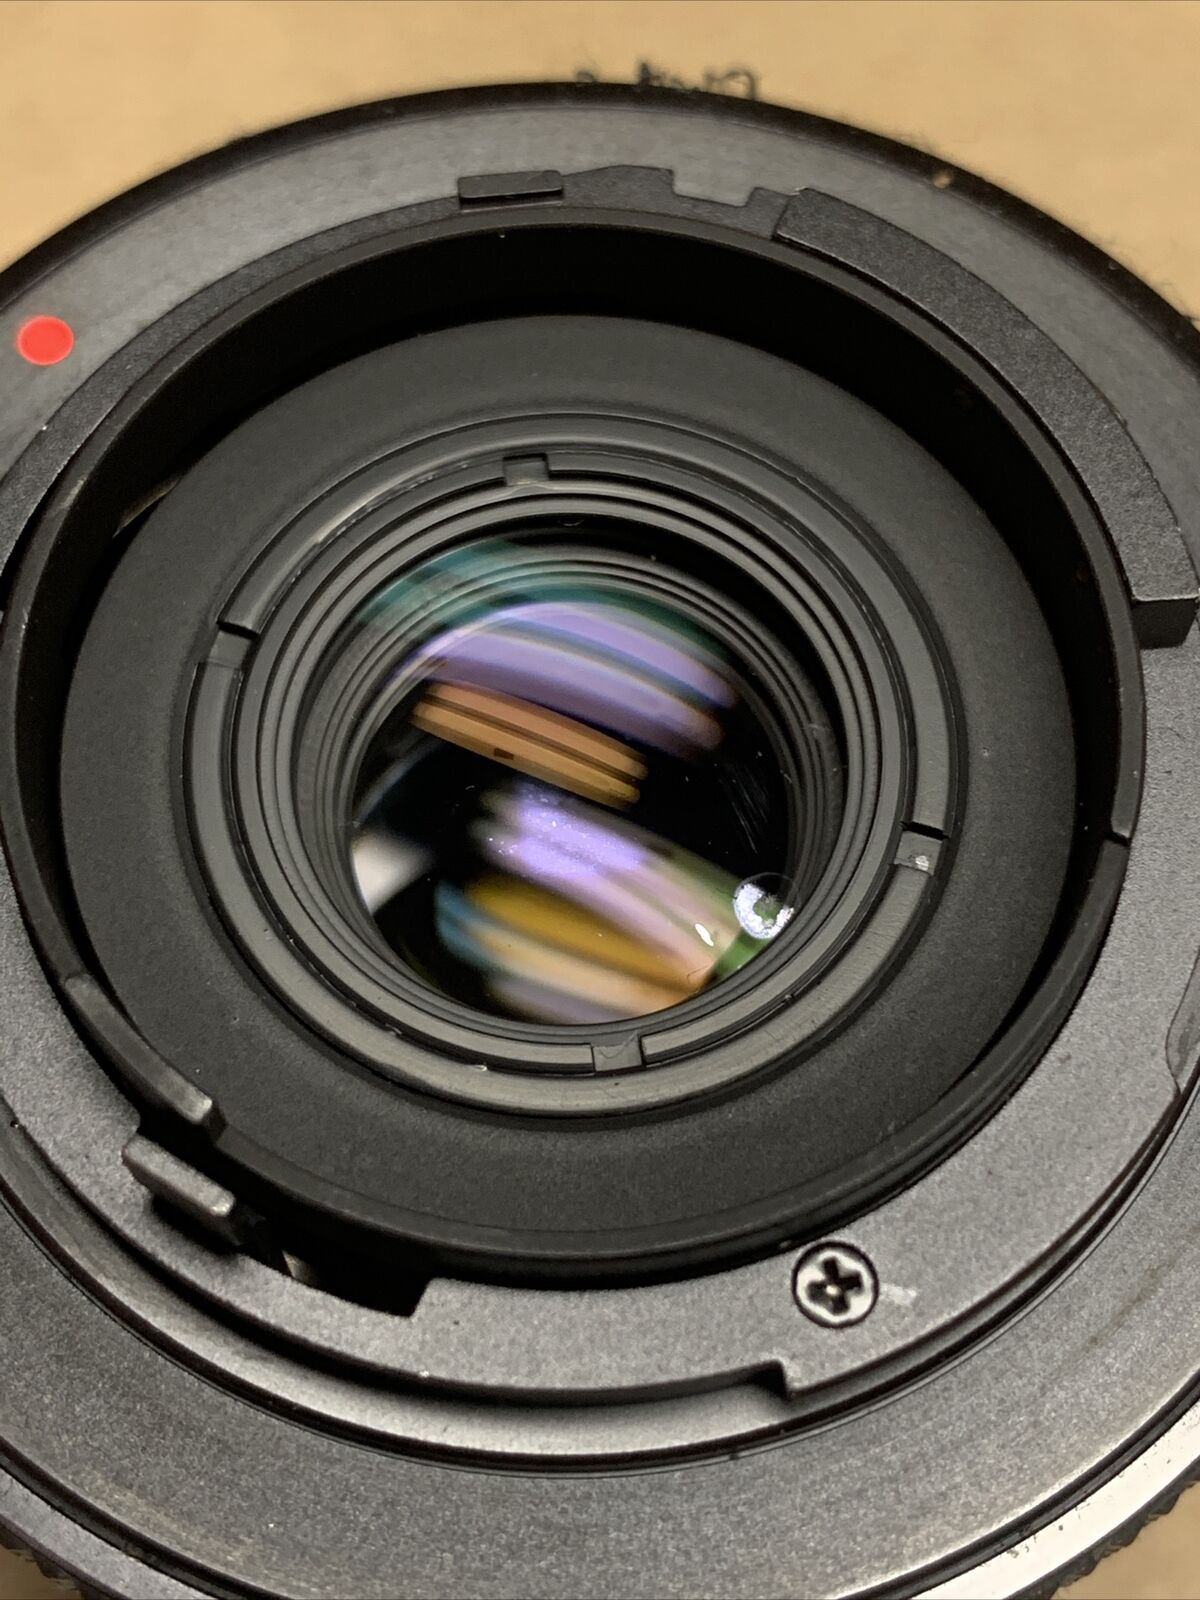 Basic Lens Repair Kit Components